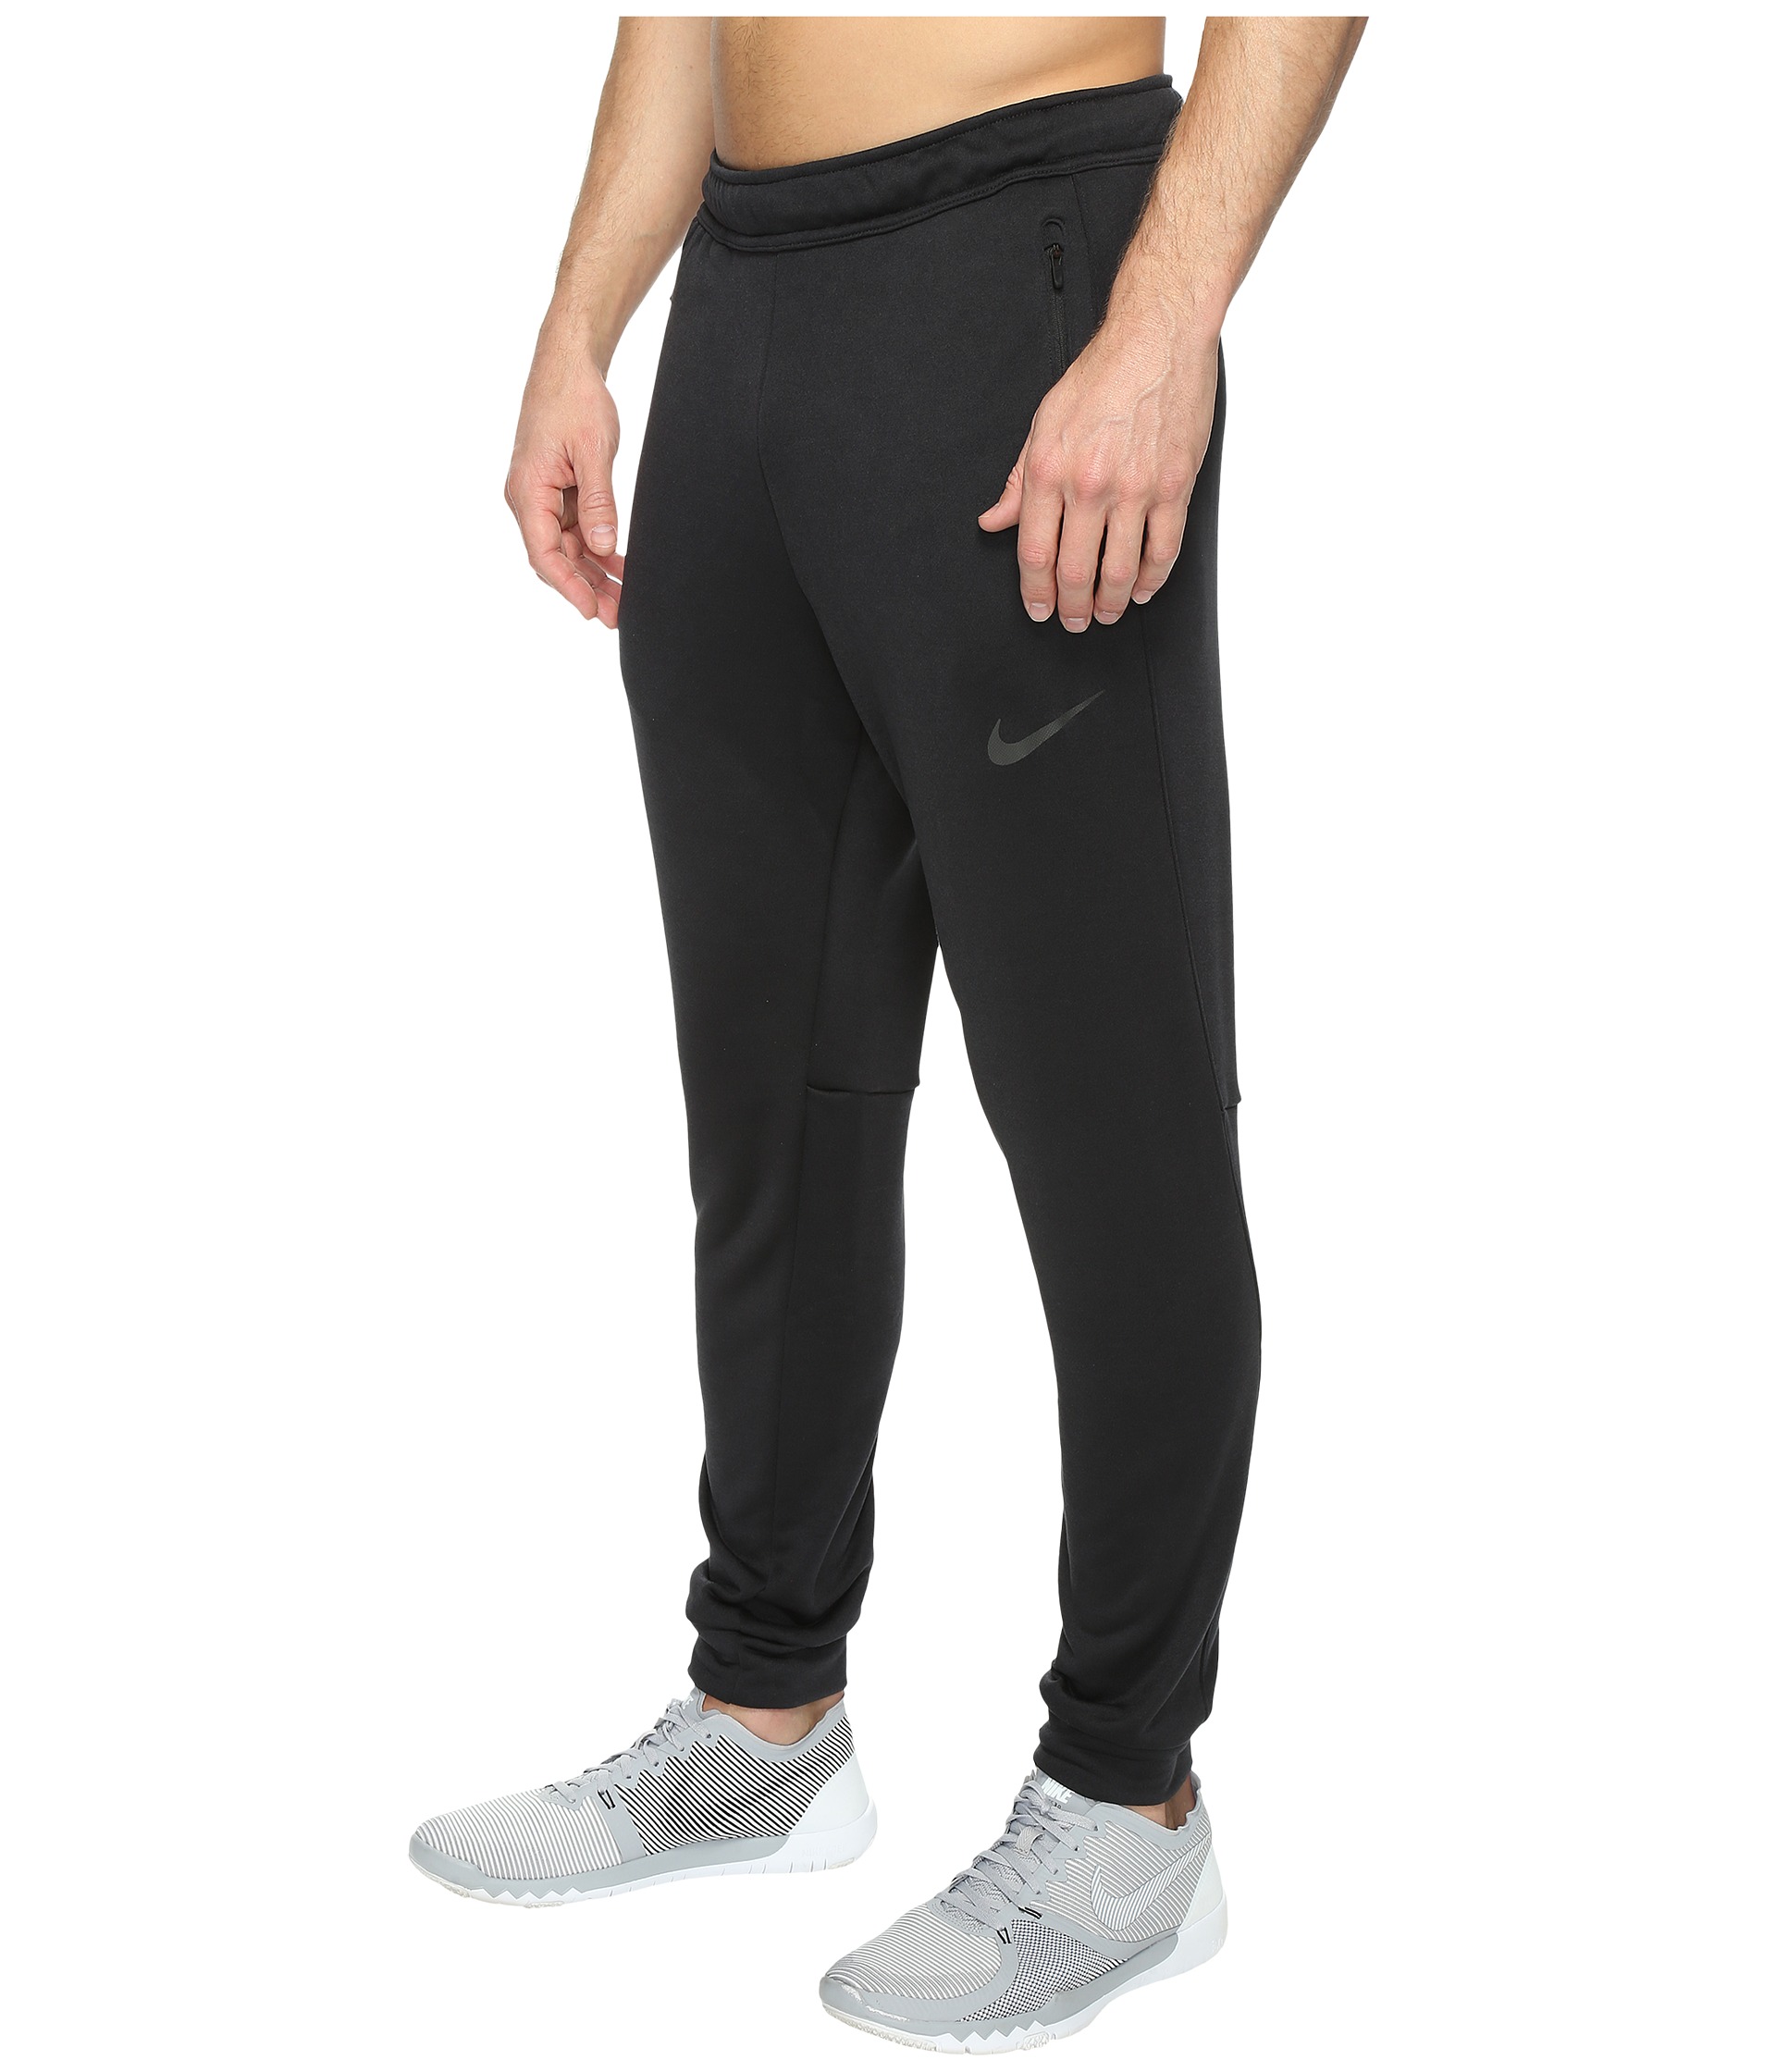 Nike Dry Fleece Training Pant - Zappos.com Free Shipping BOTH Ways